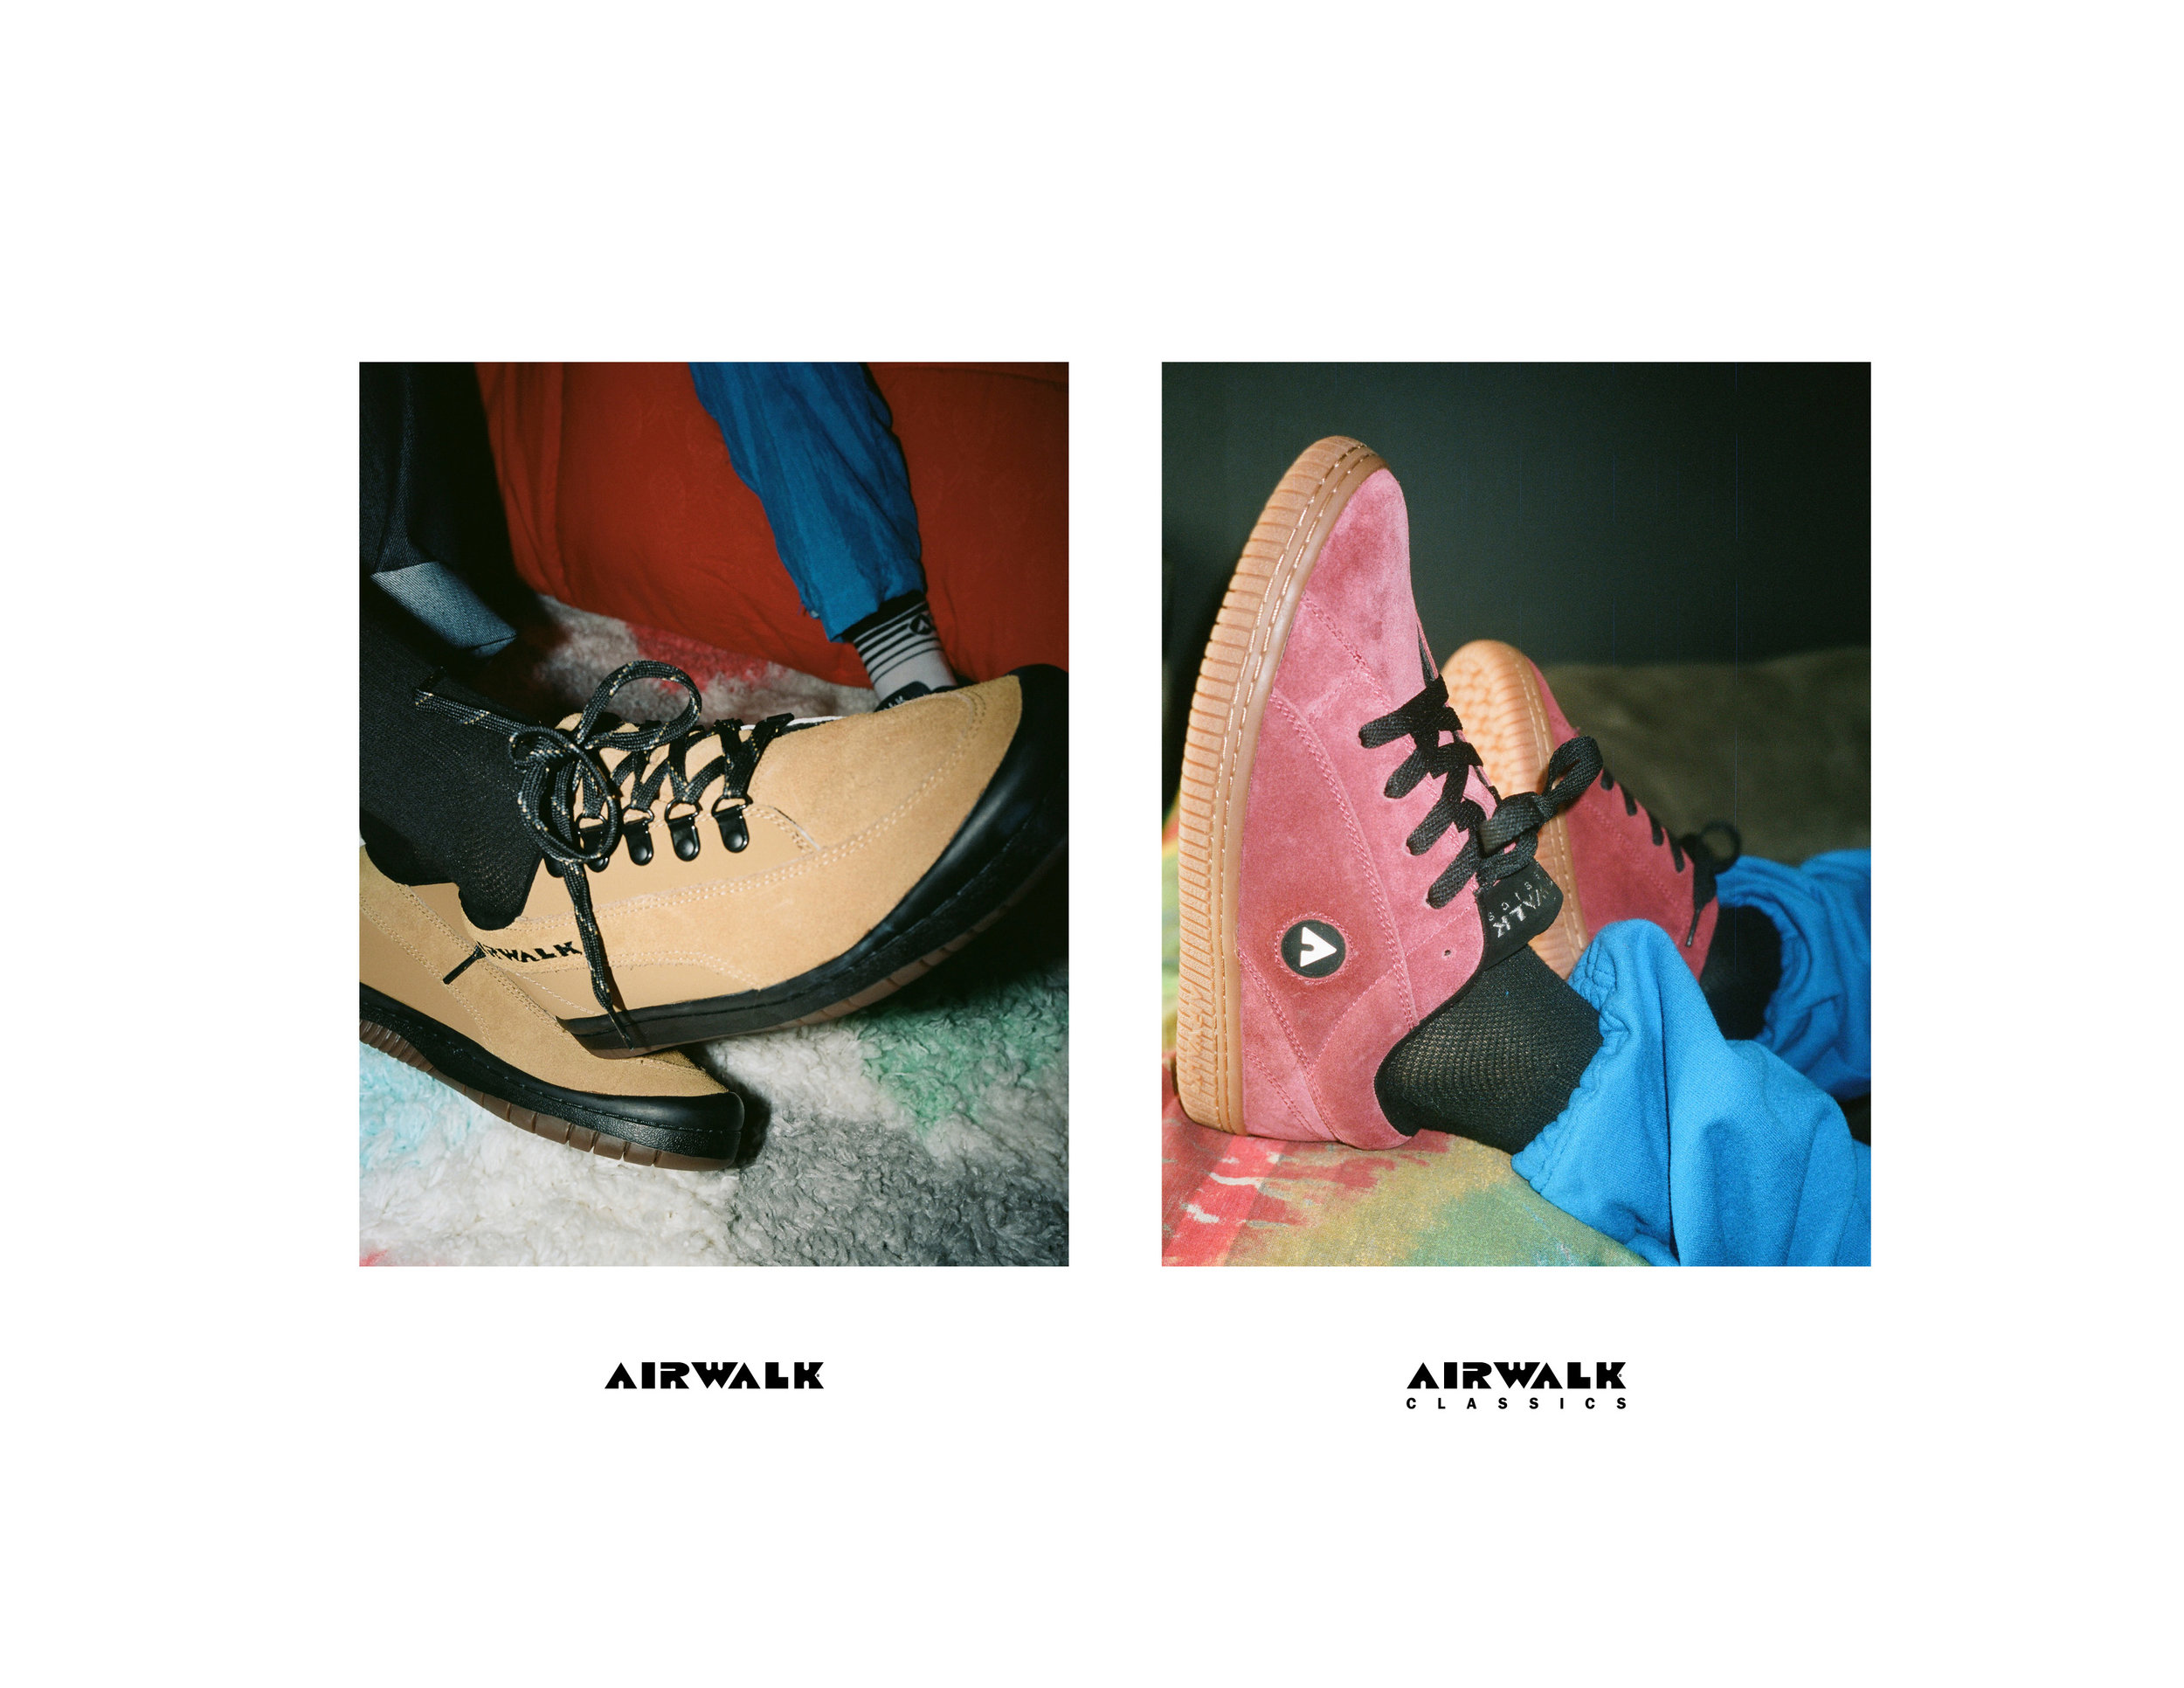 airwalk shoe company